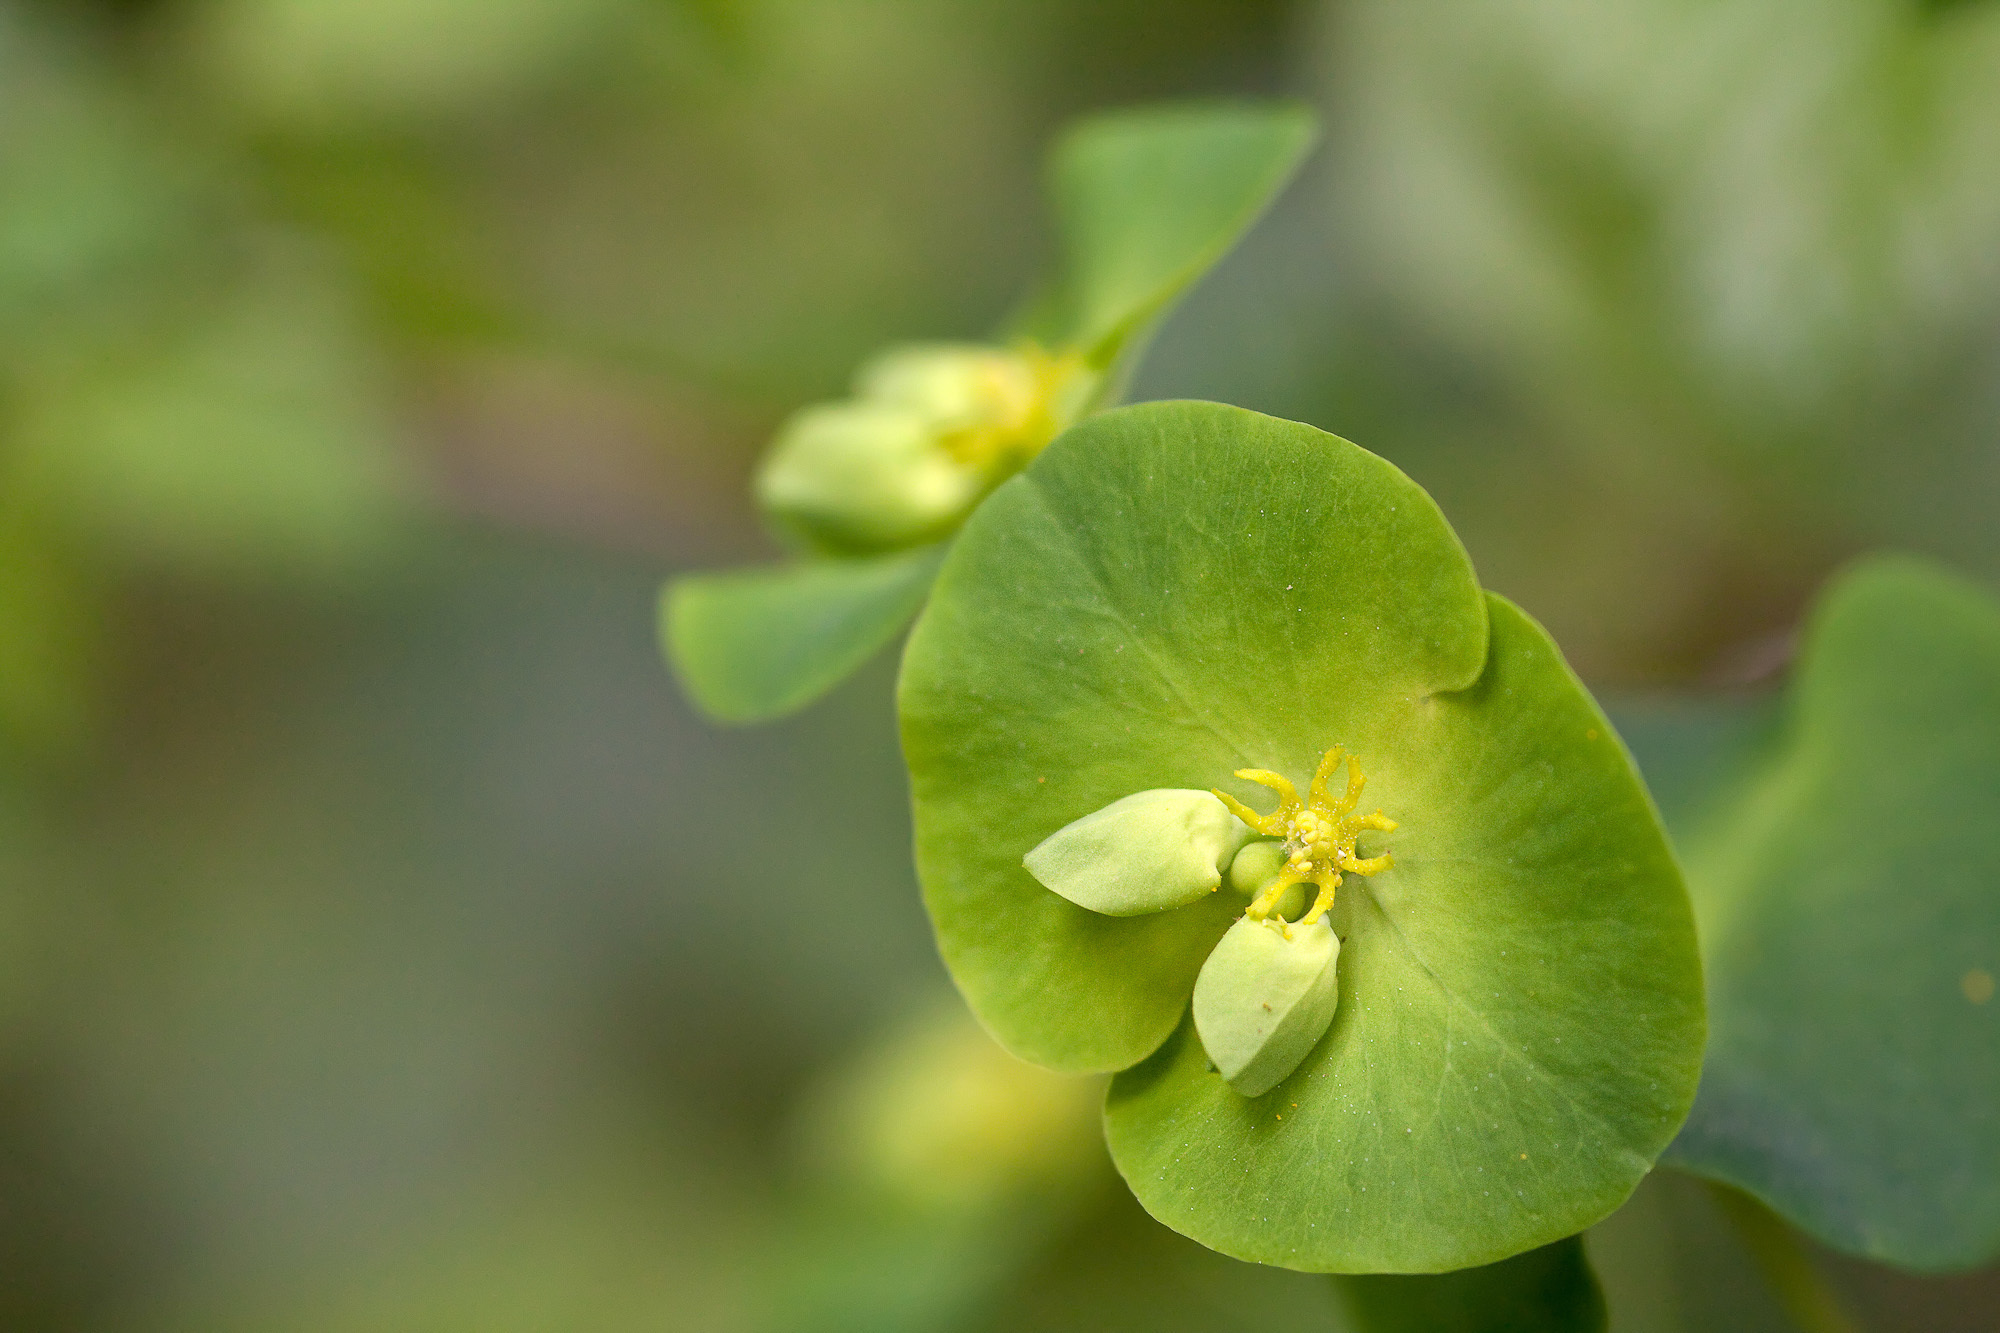 Euphorbia amygdaloides (rights holder: Sarah Gregg)